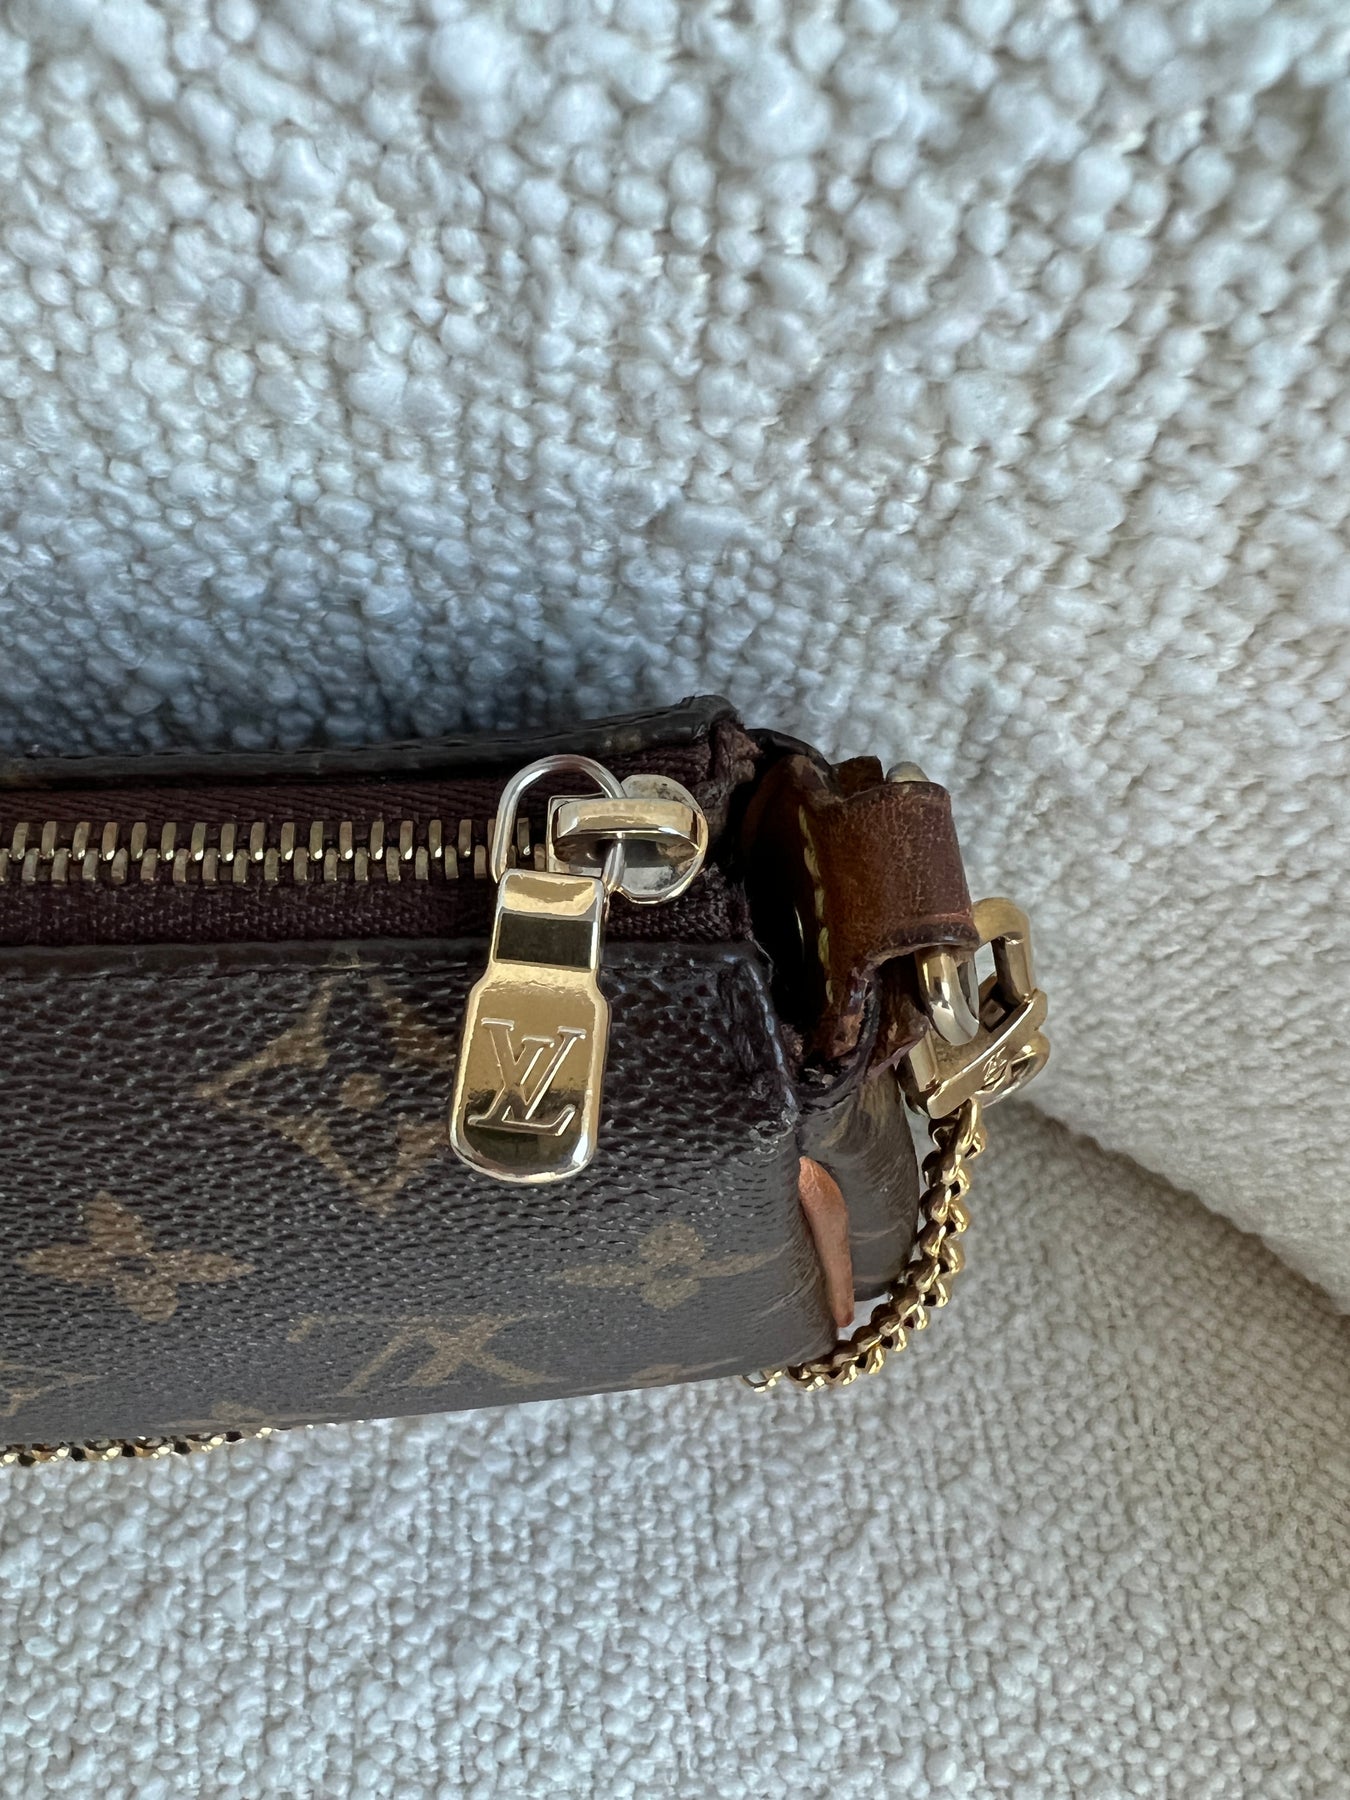 Chloé Zadori: Handbag Reveal: Louis Vuitton Eva Clutch Monogram +